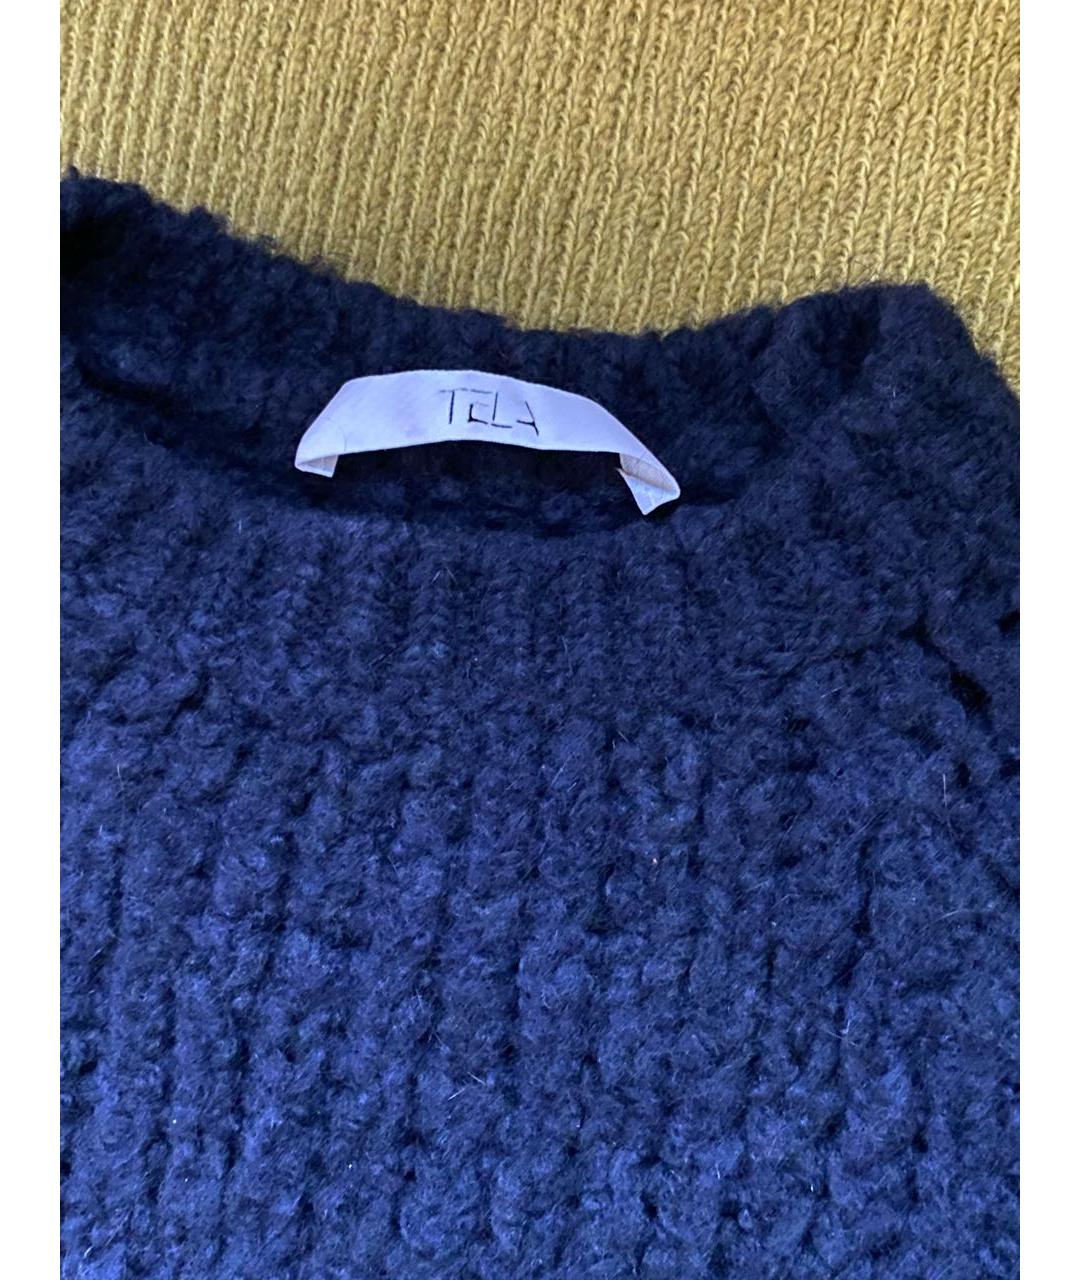 TELA Темно-синий джемпер / свитер, фото 5